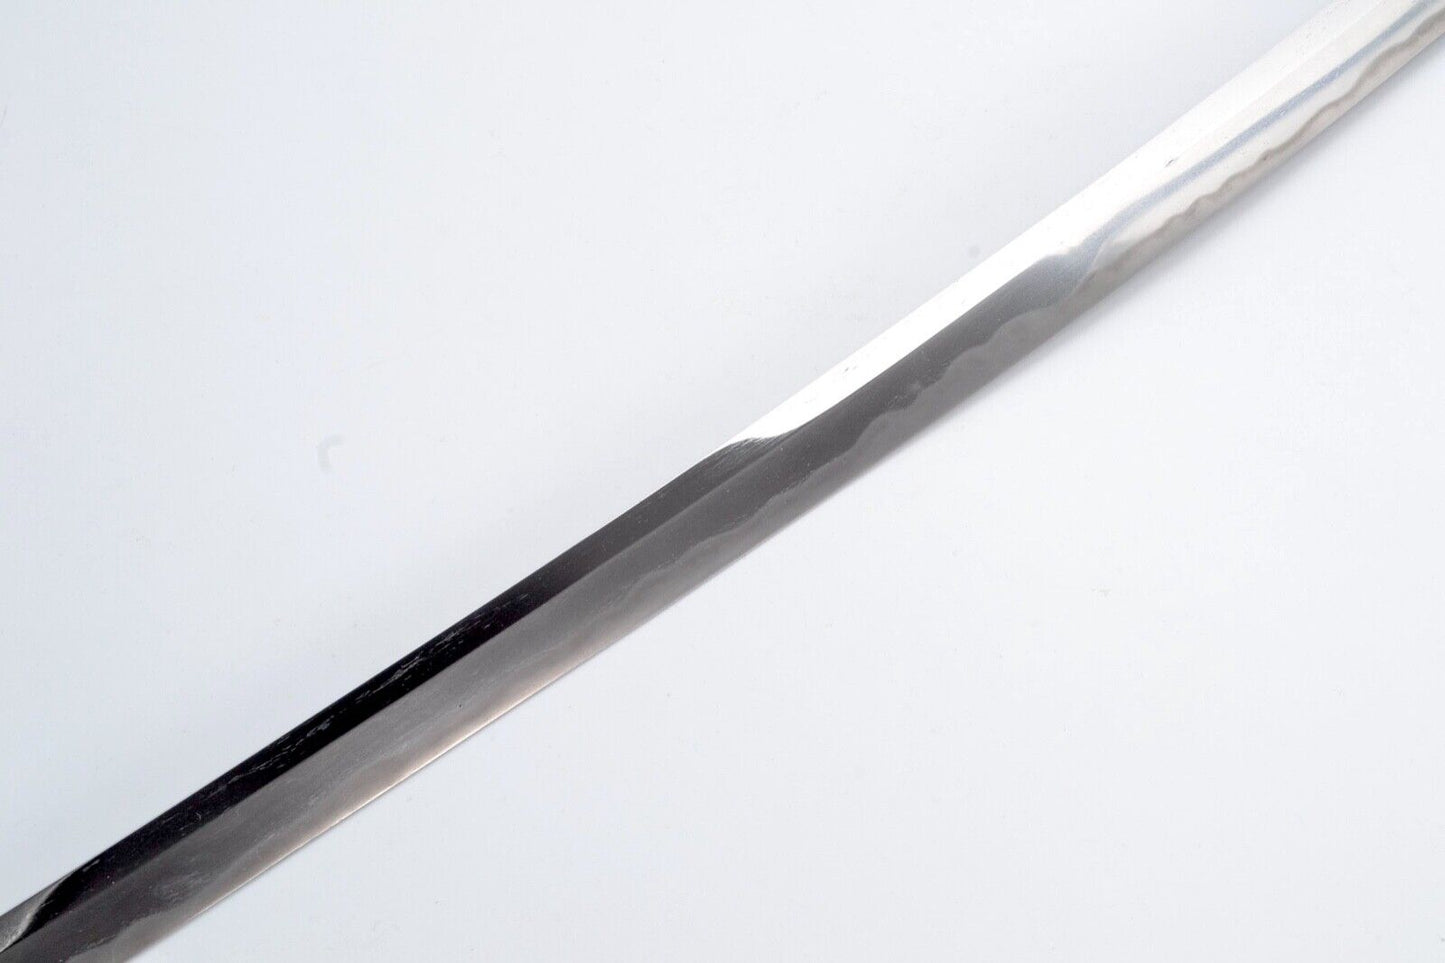 Antique Japanese Warrior Katana Tachi Collectible Weapon Samurai Legacy Sword Muromachi Era.